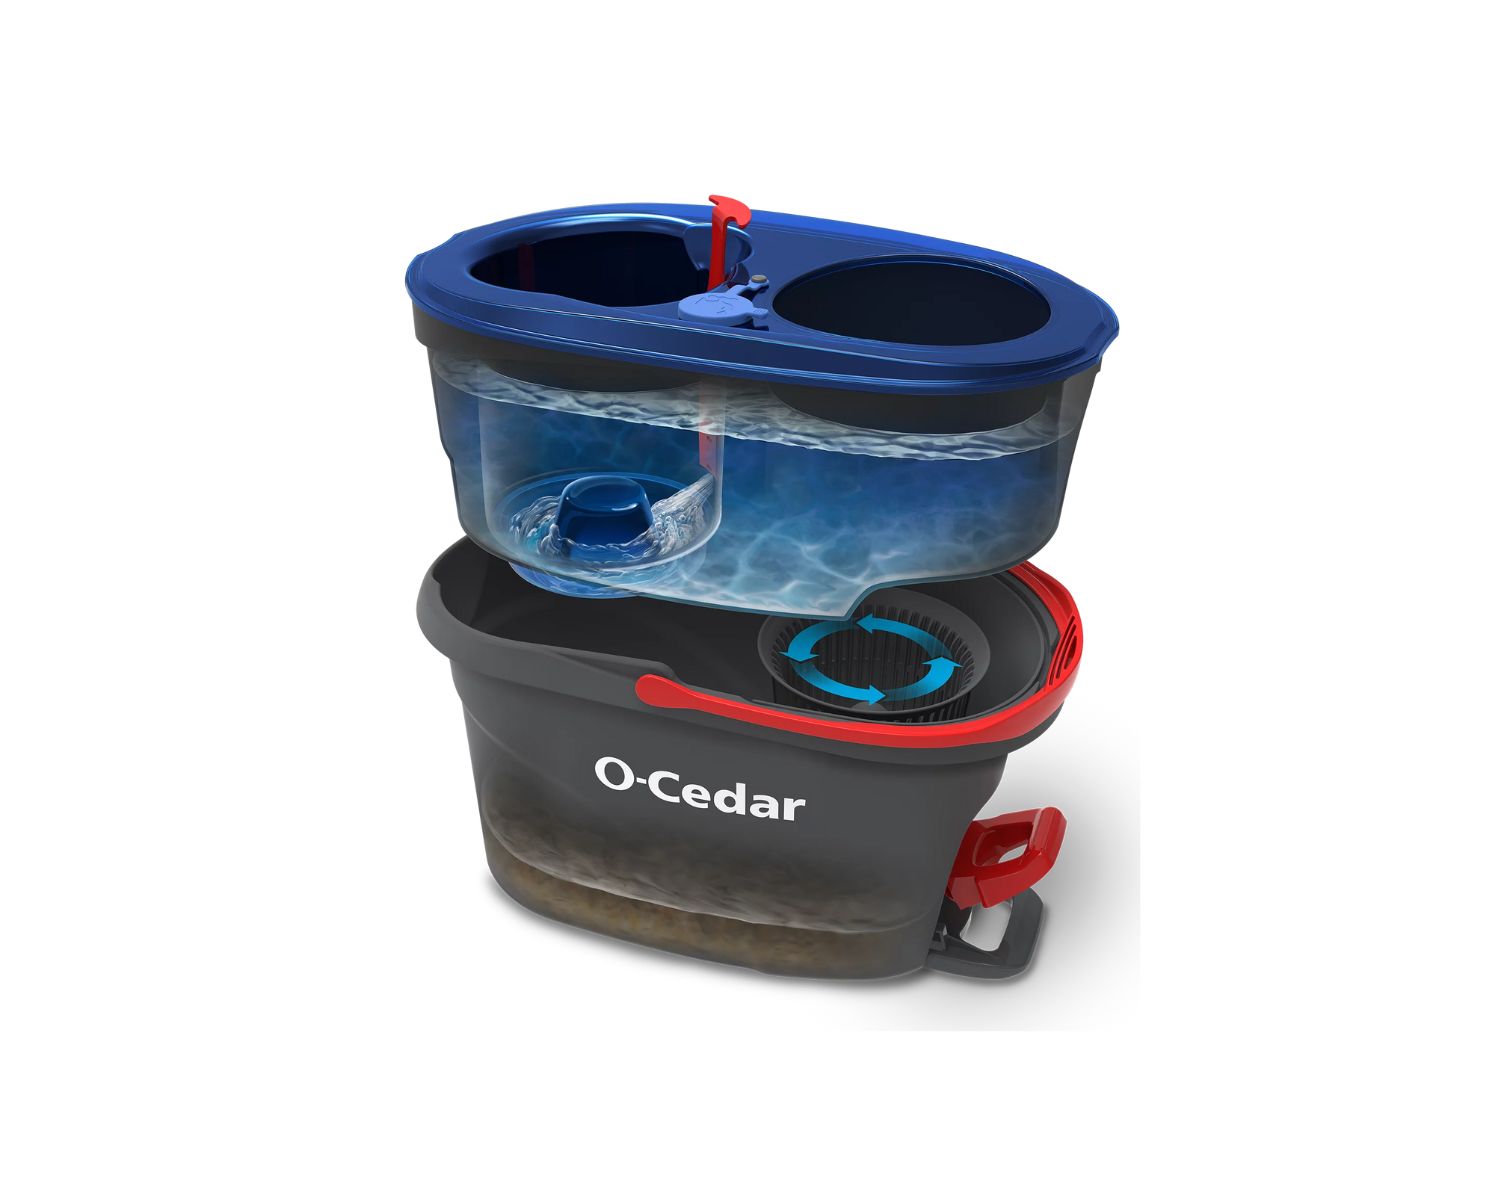 How To Fill O-Cedar Spin Mop